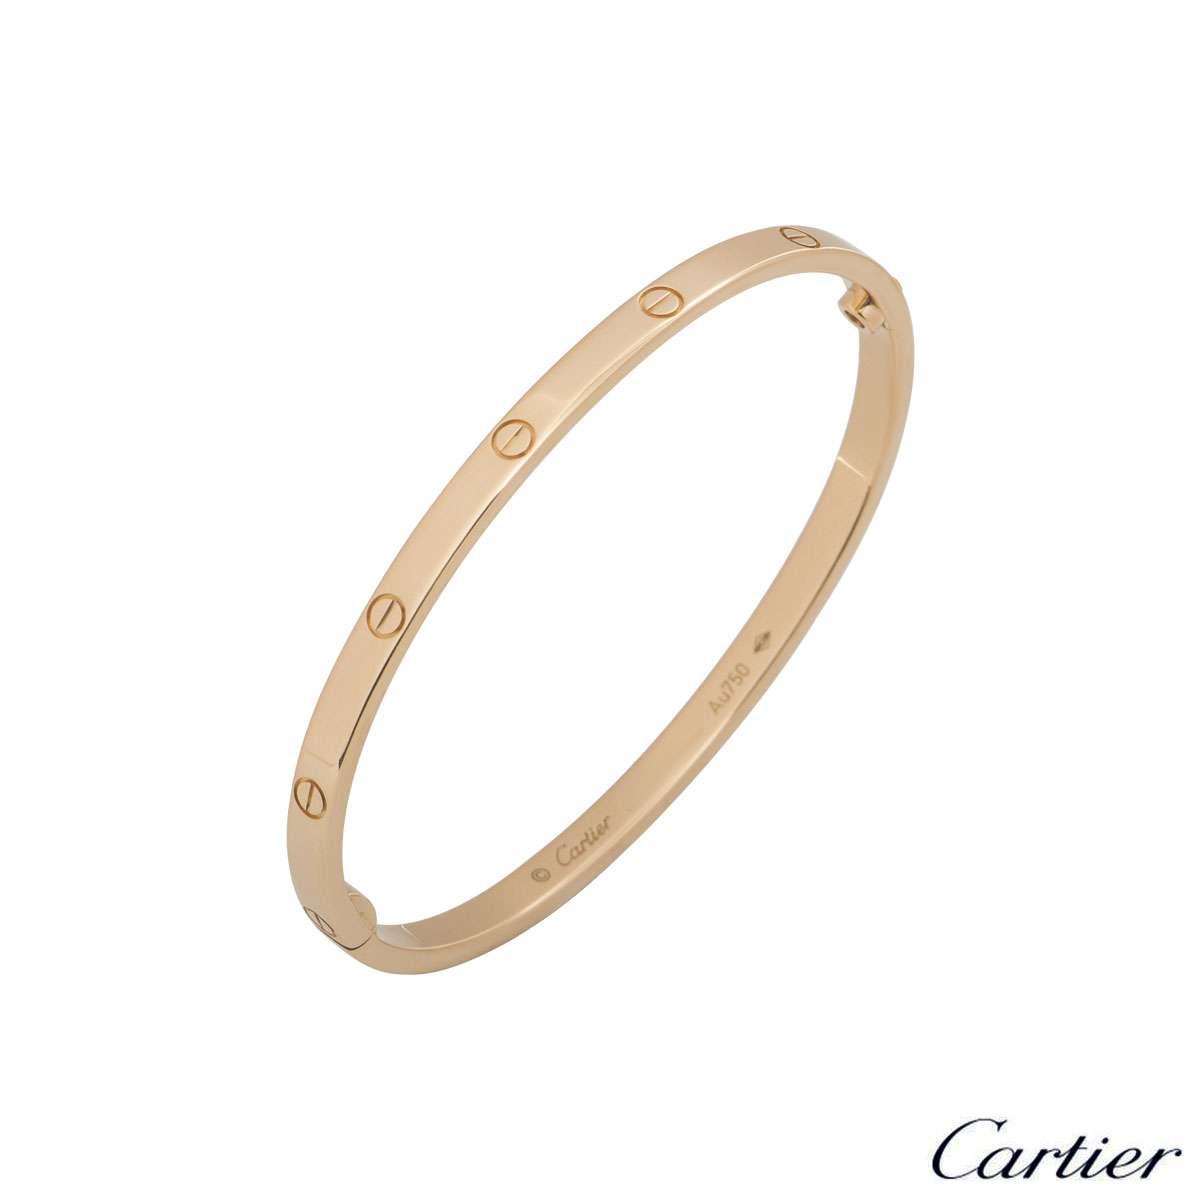 weight of cartier love bracelet size 17